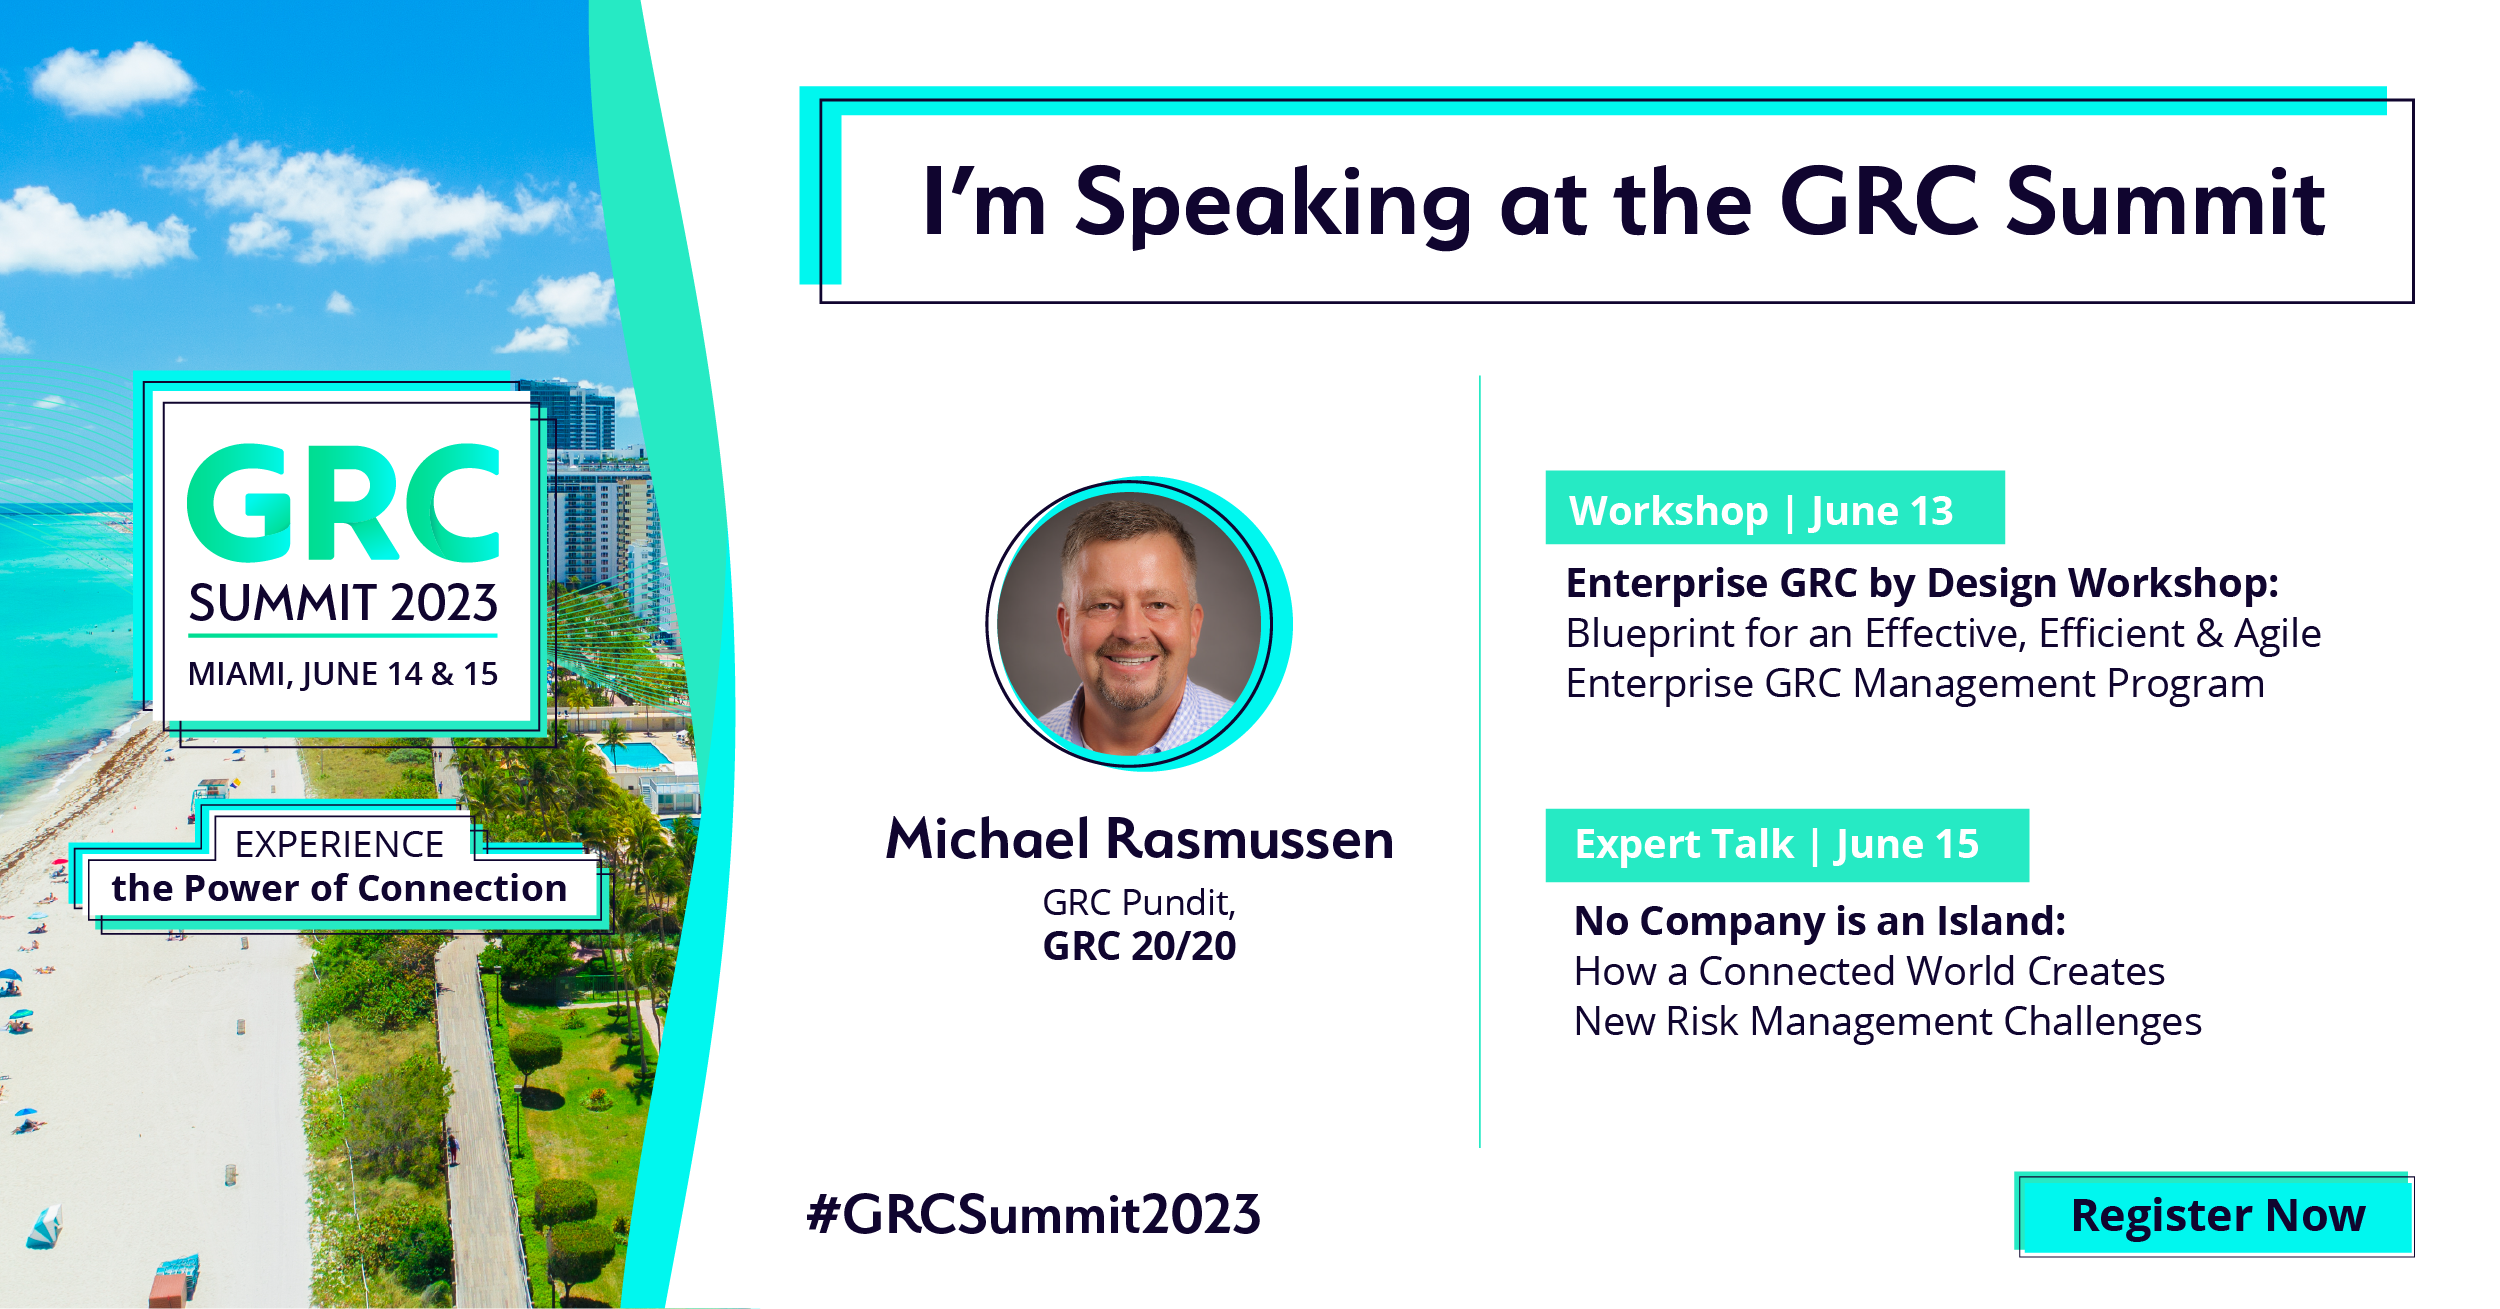 Michael Rasmussen, GPRC Summit 2023